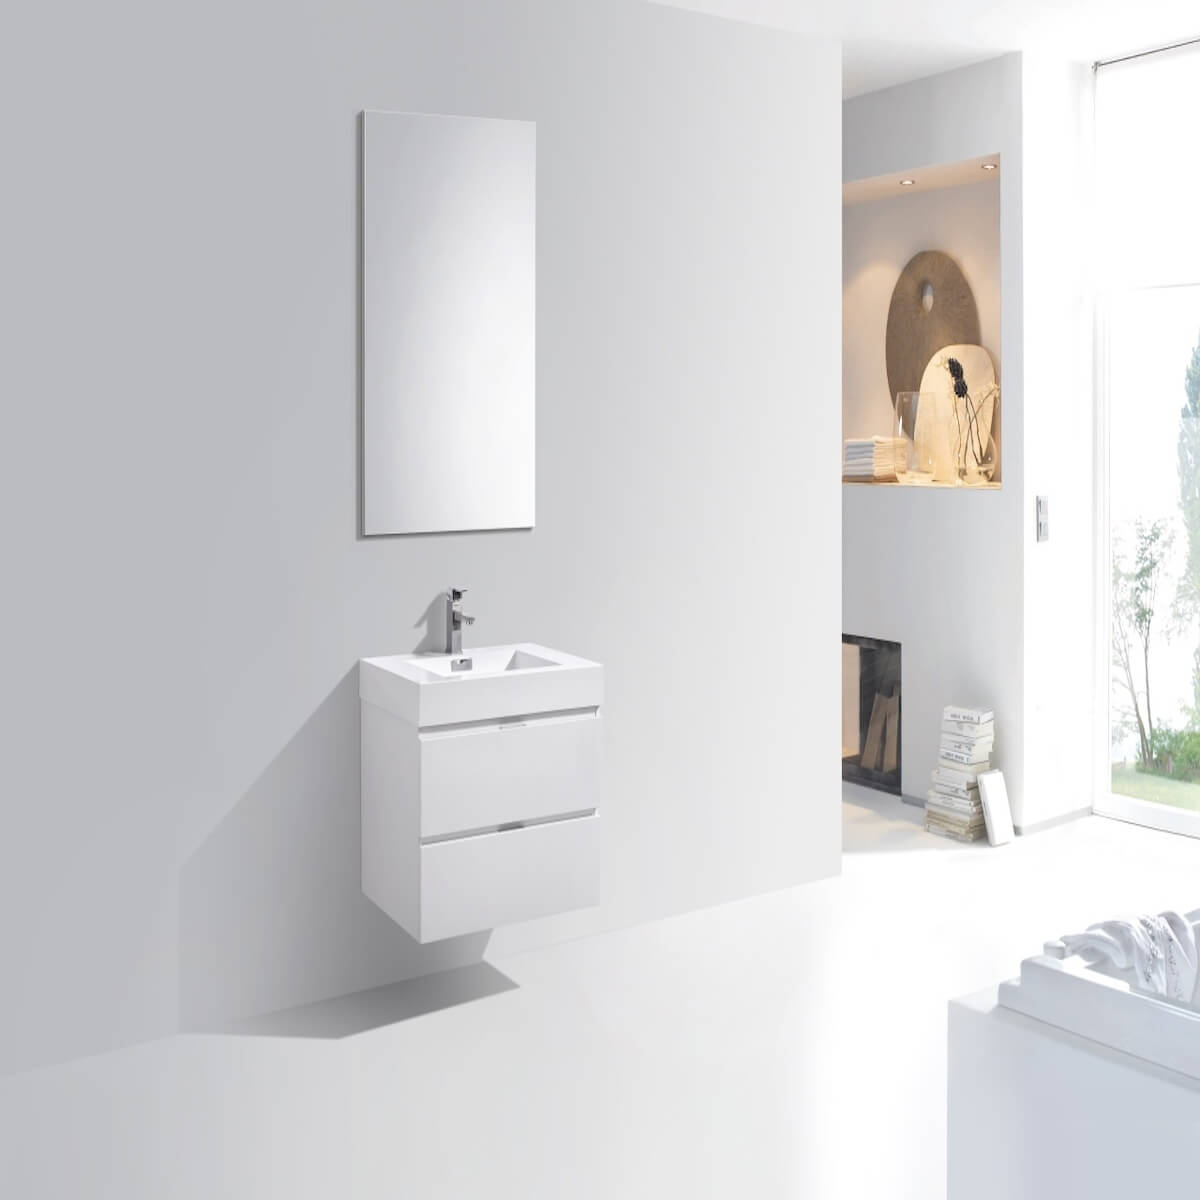 KubeBath Bliss 30" Gloss White Wall Mount Single Vanity BSL30-GW in Bathroom #finish_gloss white